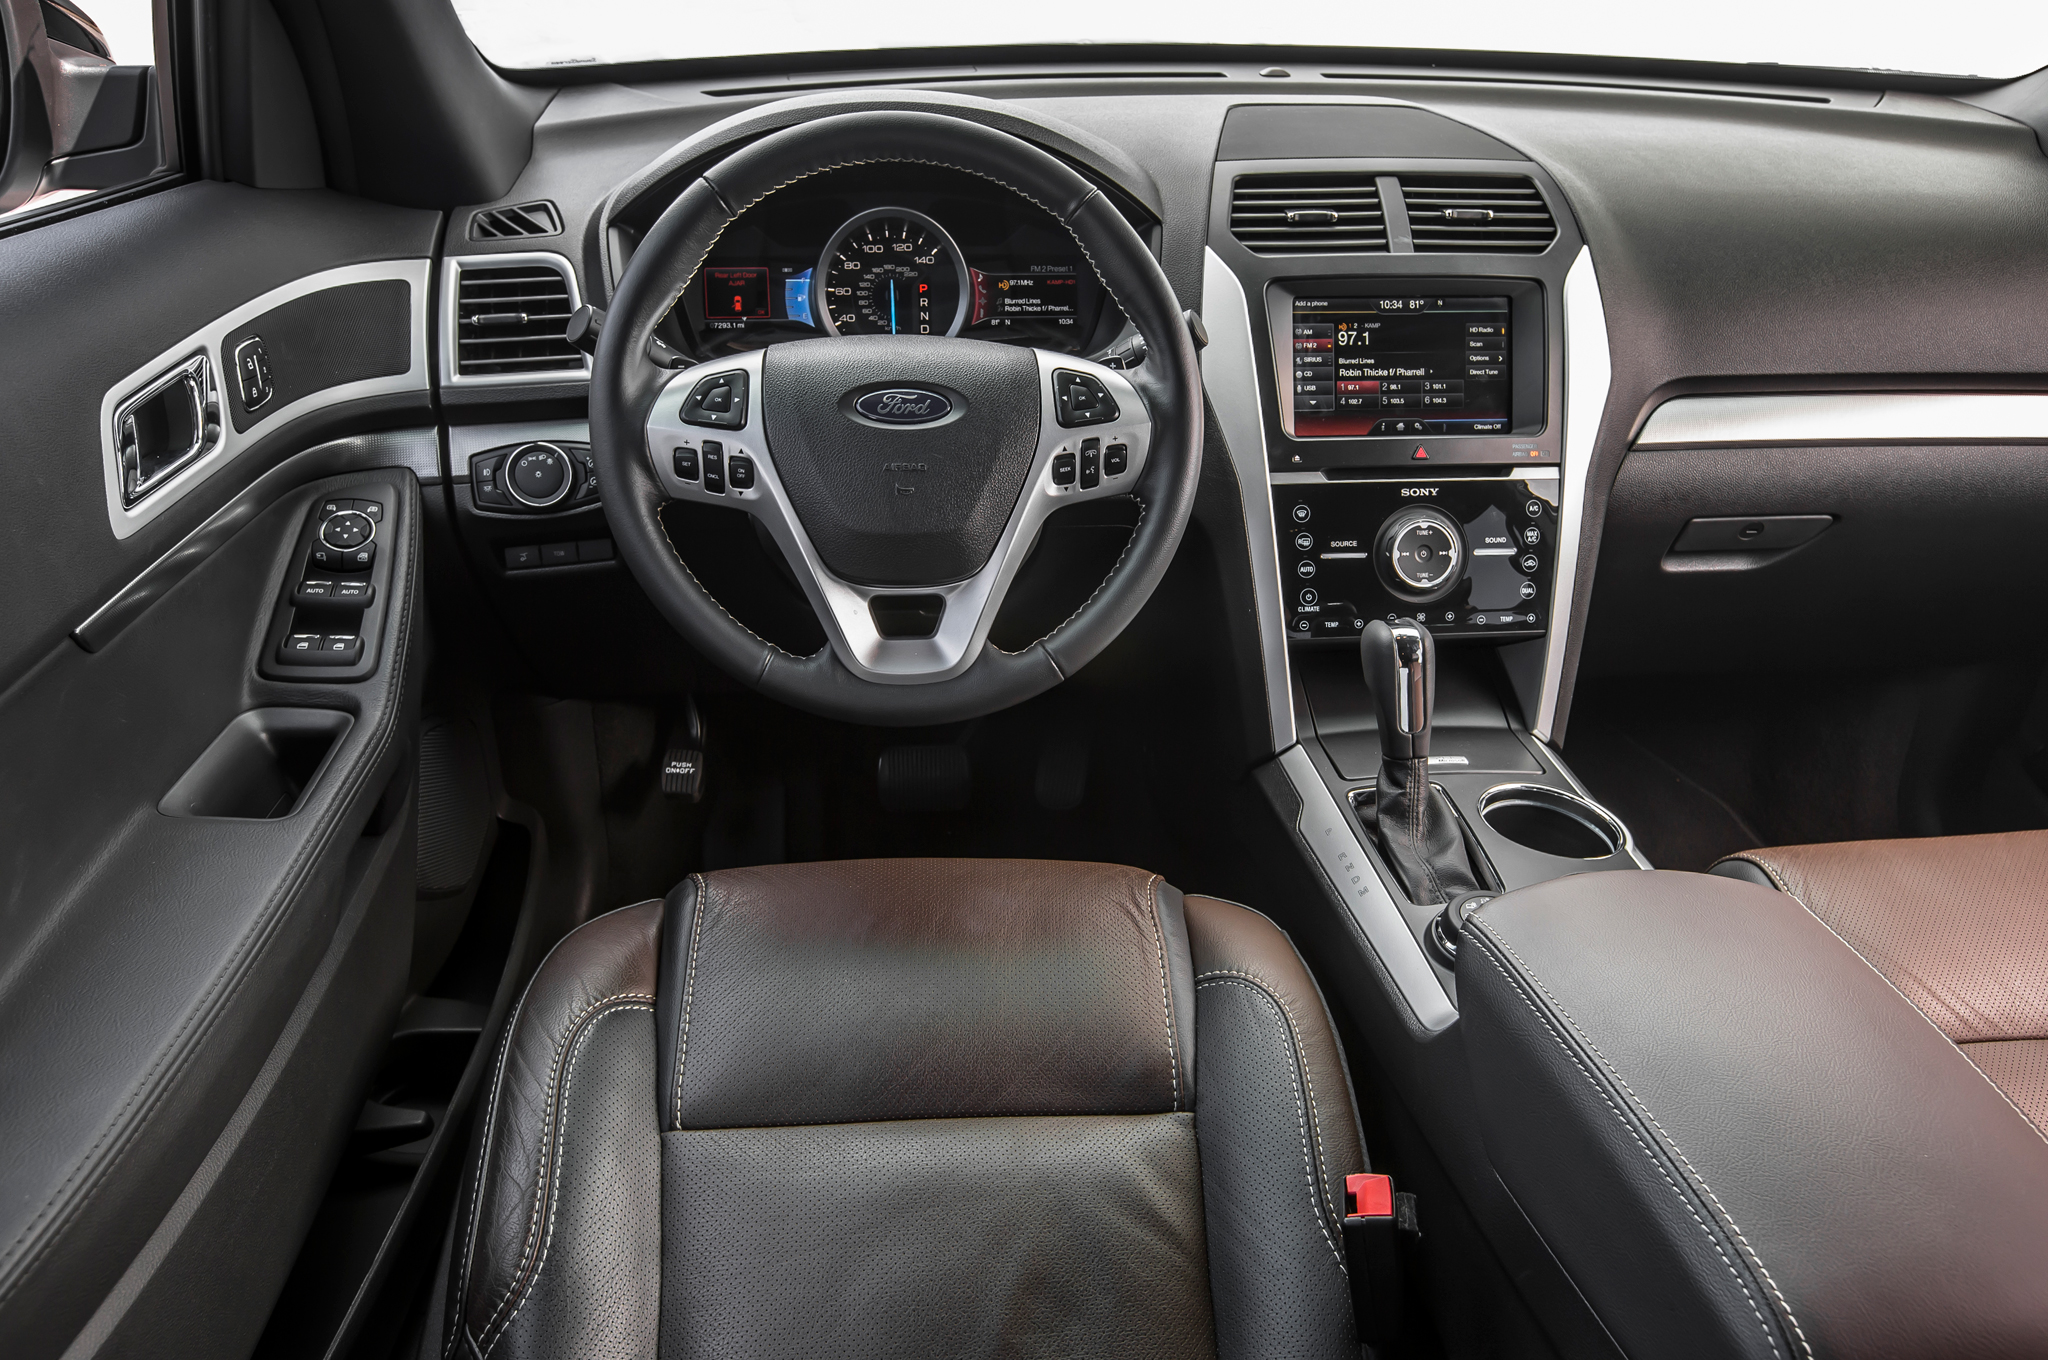 2014 Ford Explorer Interior Dashboard View